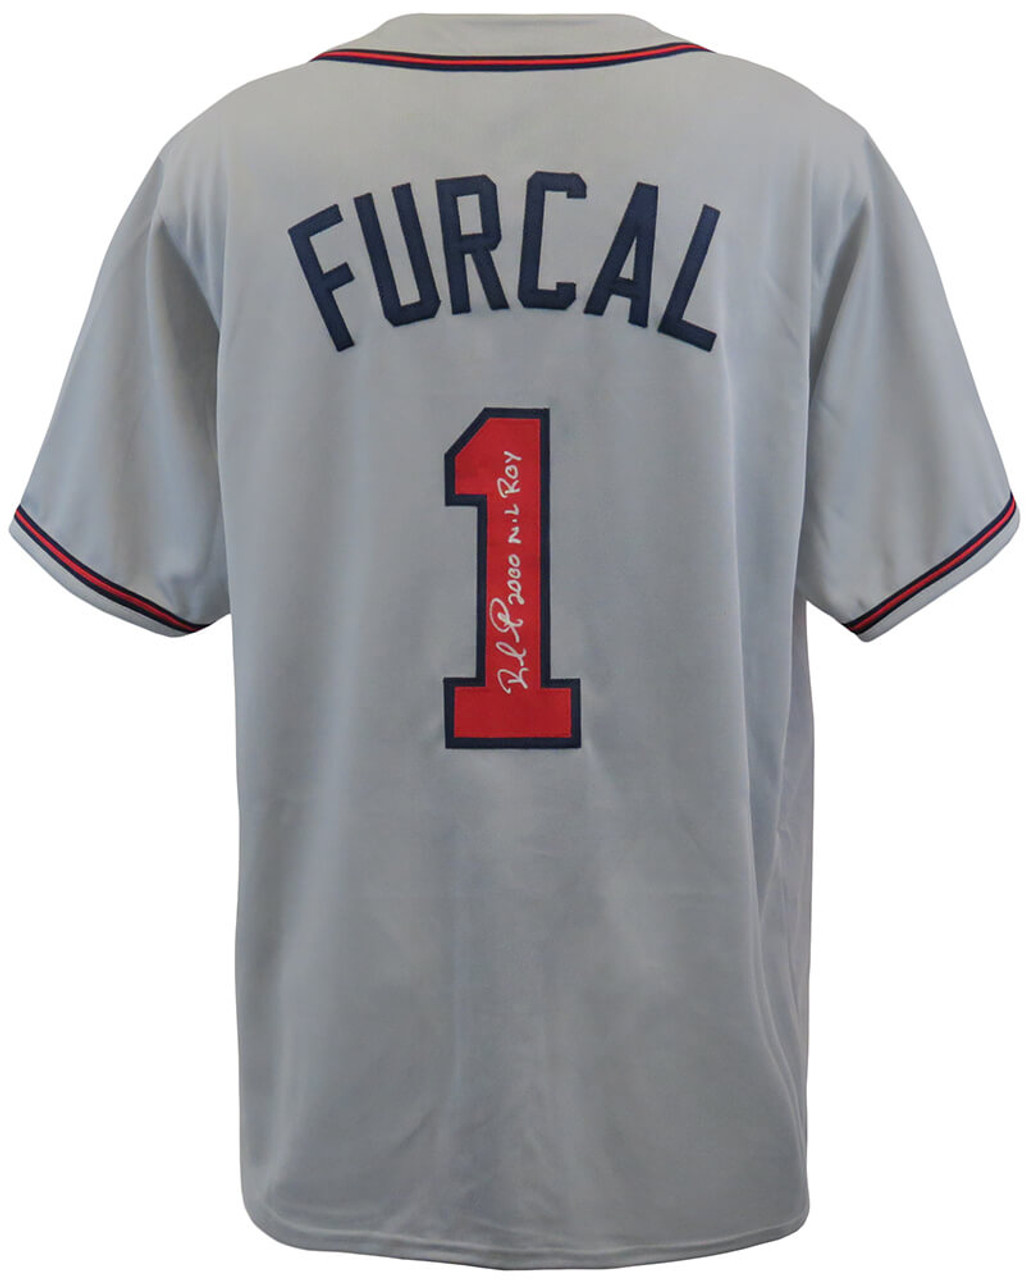 Atlanta Braves Rafael Furcal Signed Grey Jersey w/2000 NL ROY